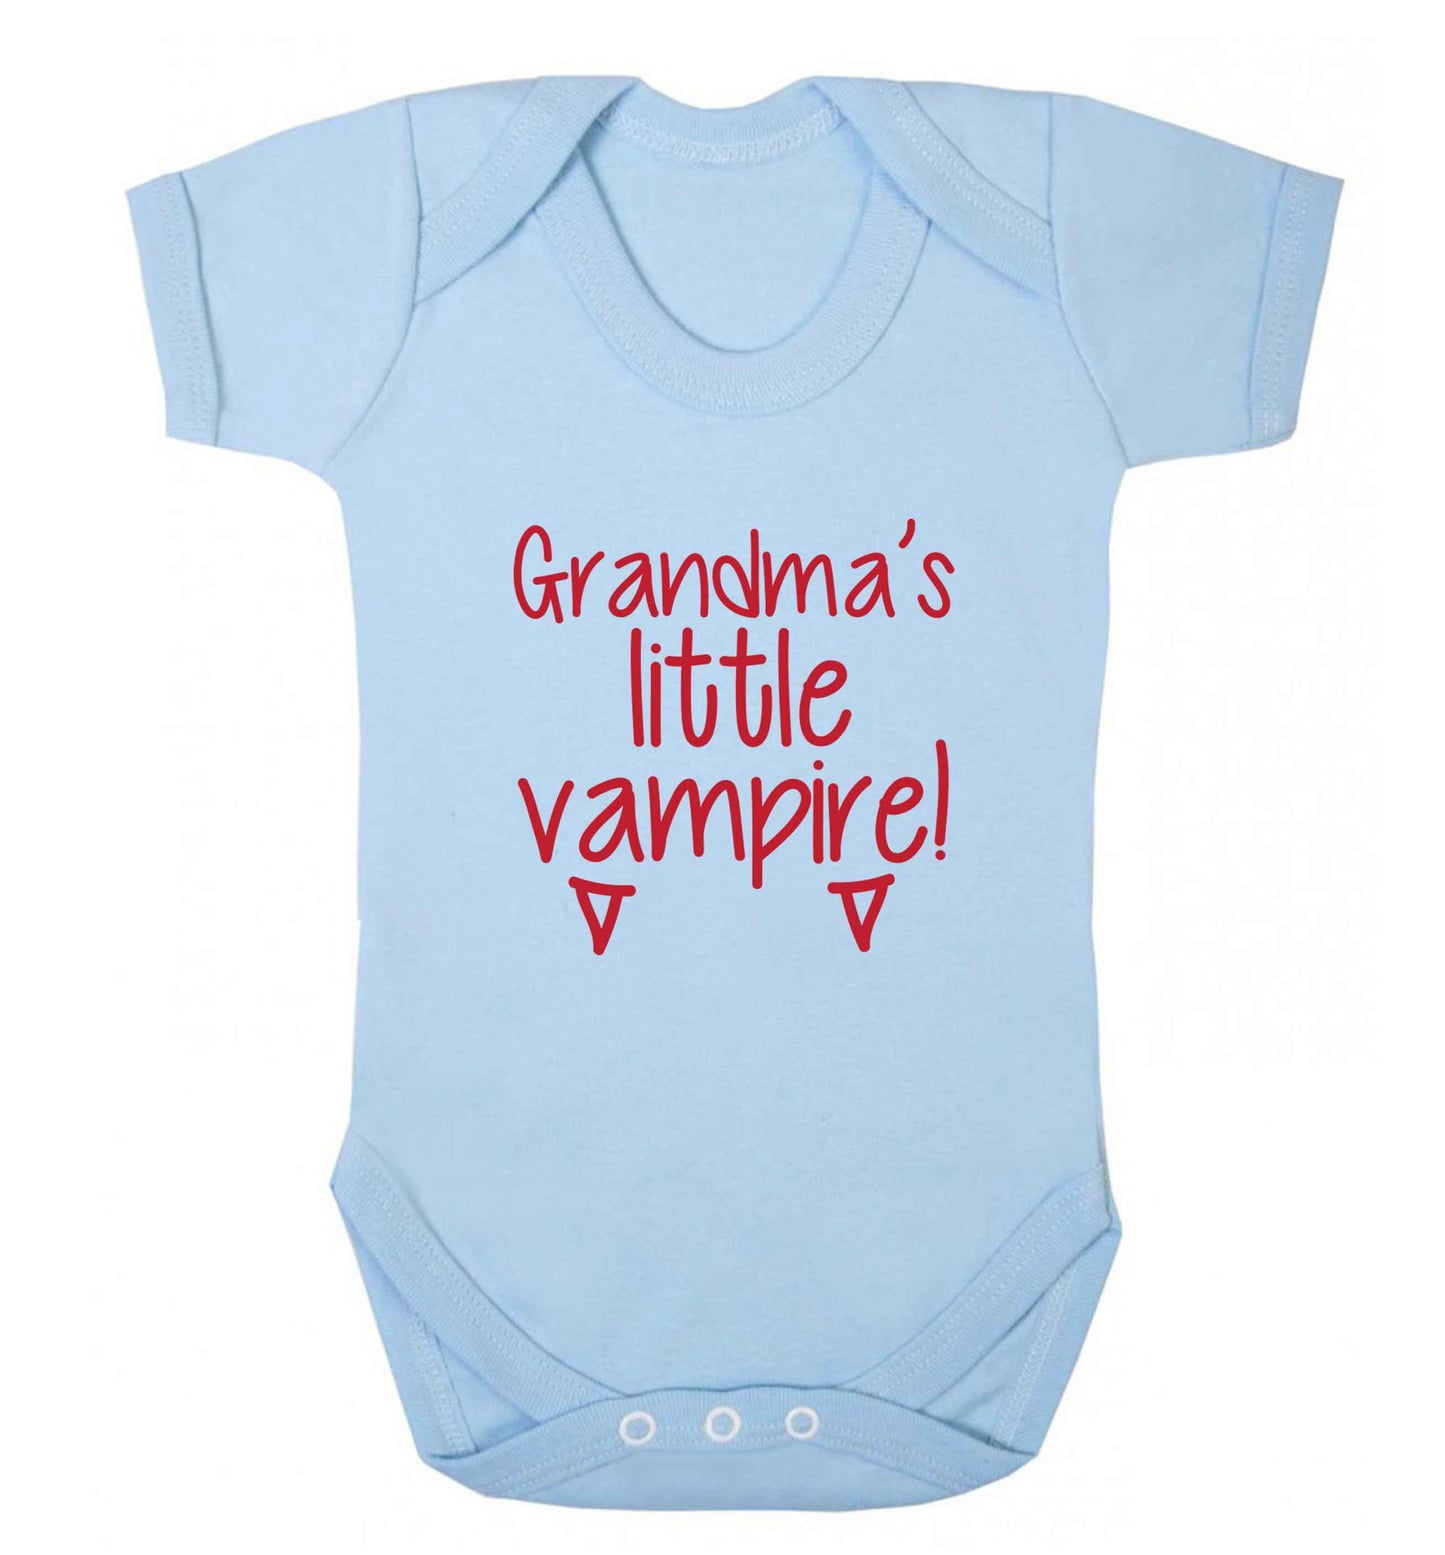 Grandma's little vampire baby vest pale blue 18-24 months